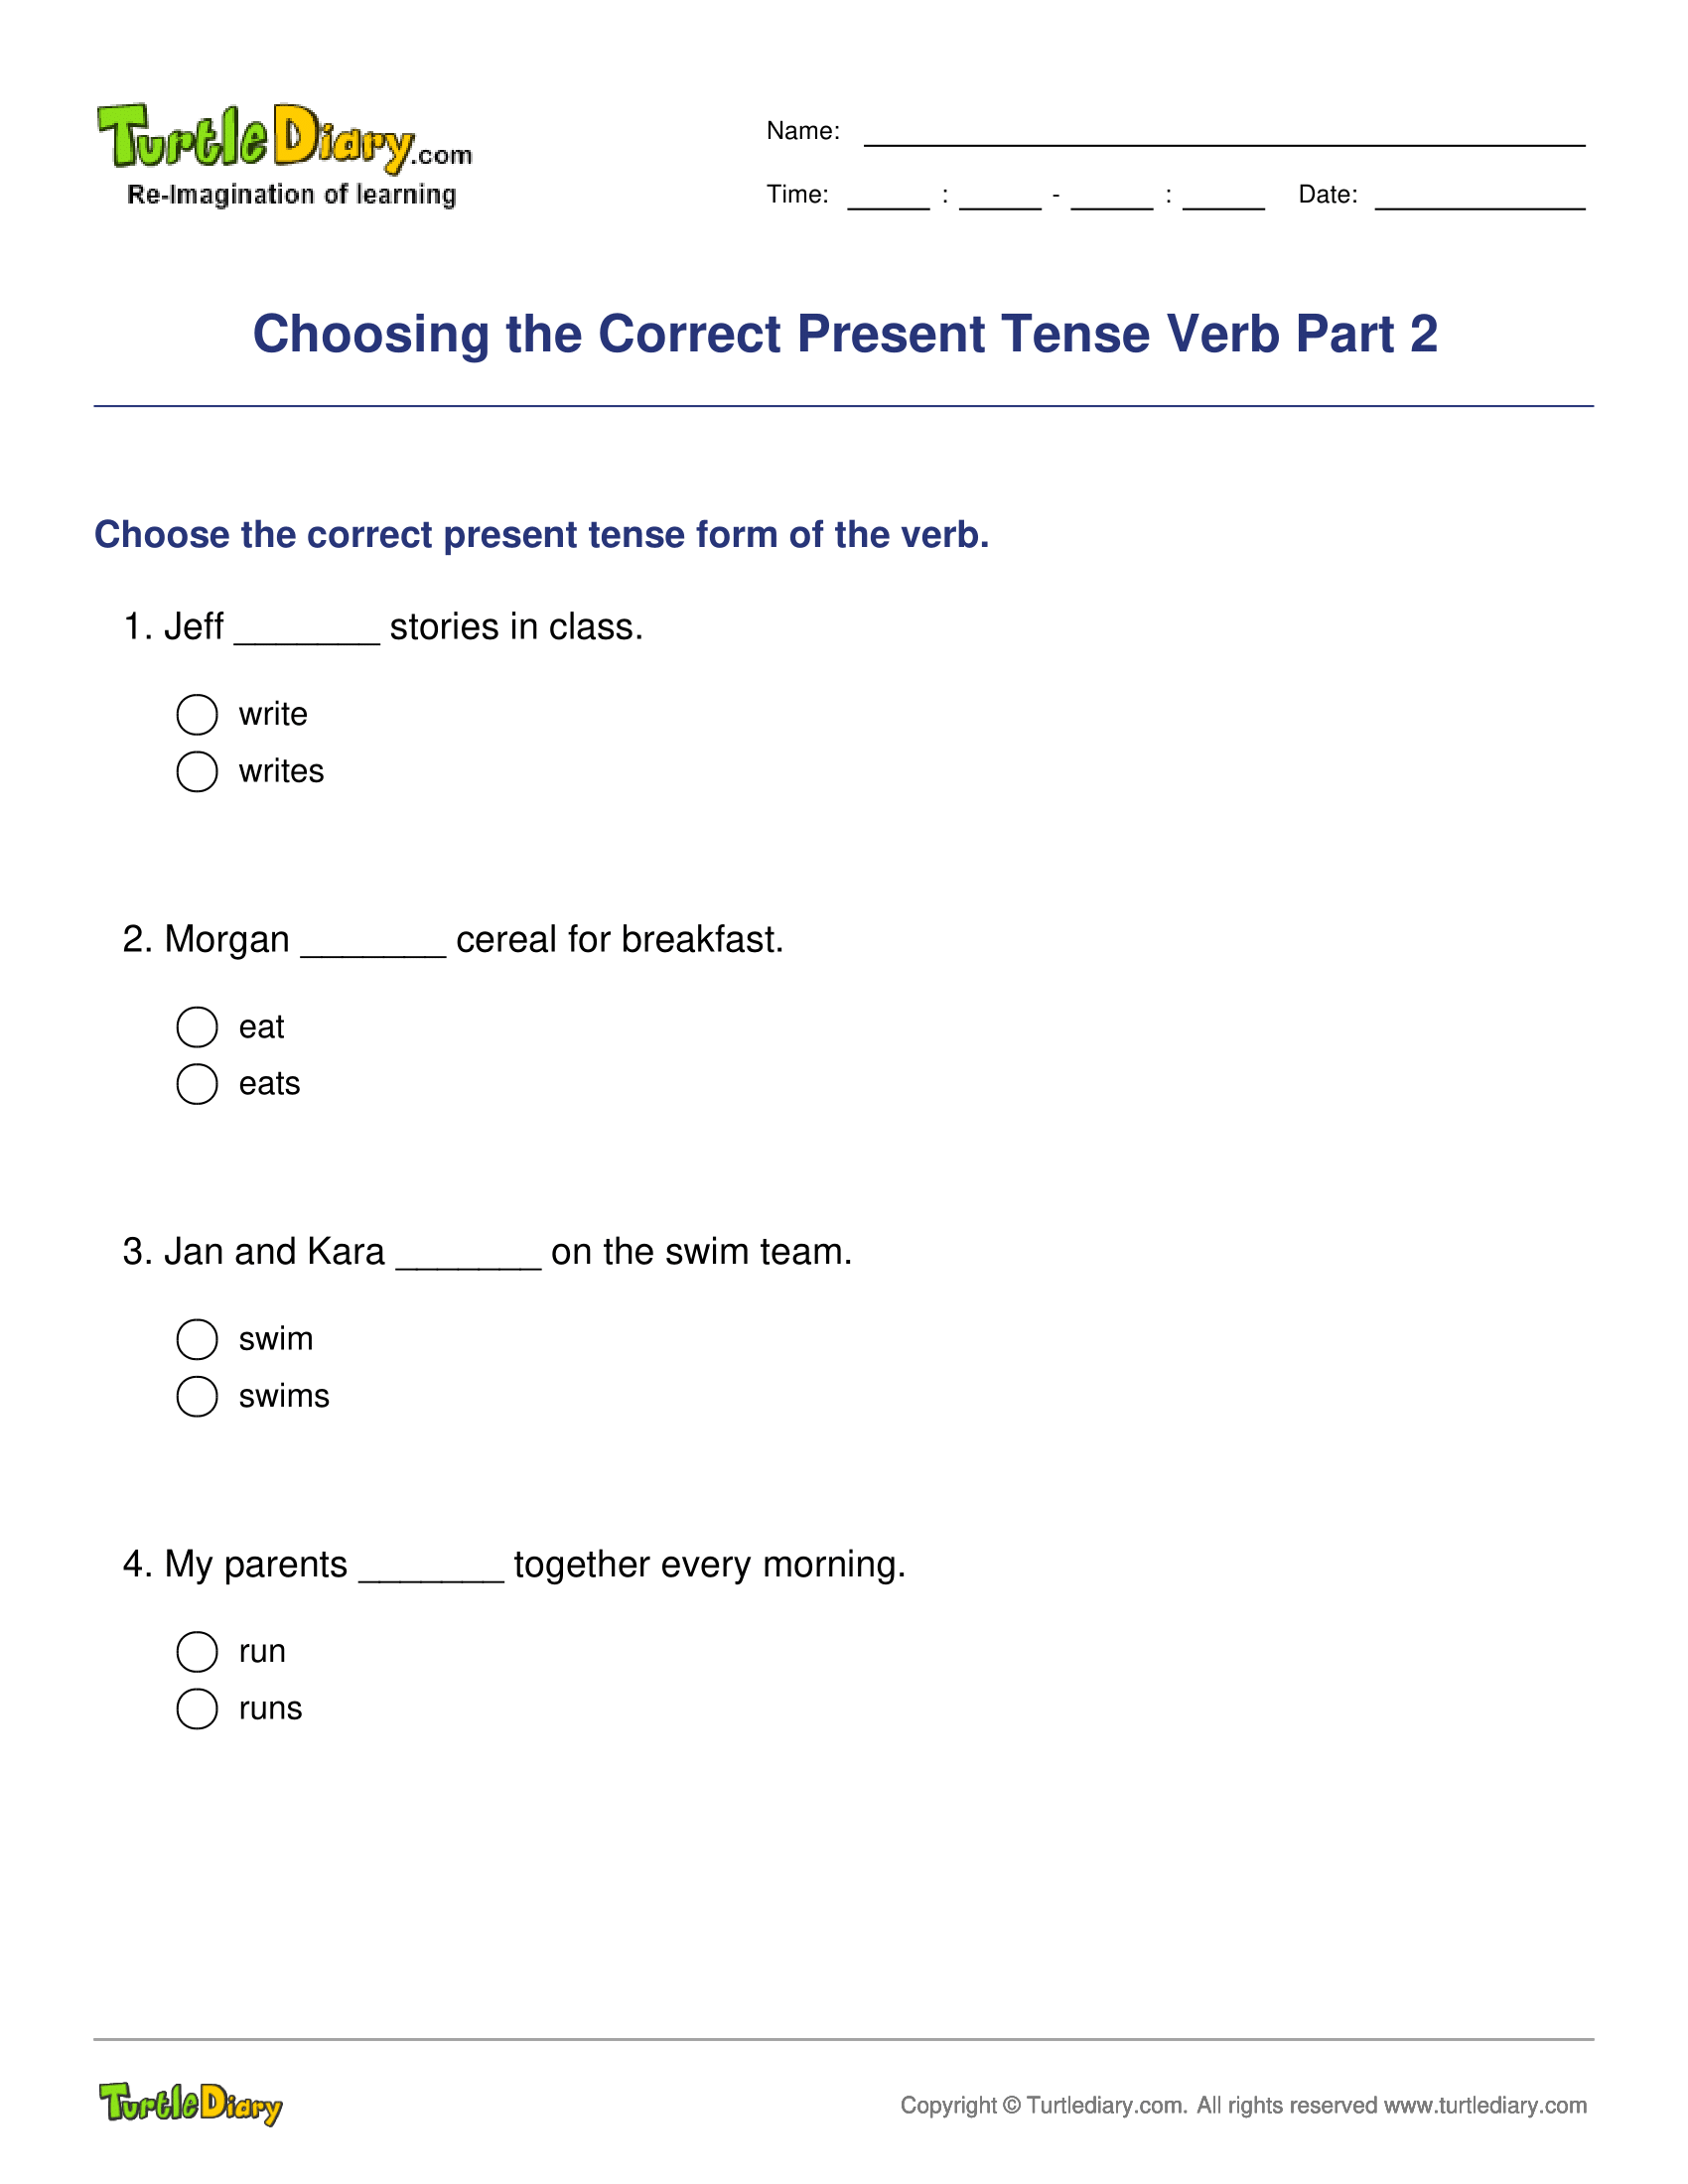 Choosing the Correct Present Tense Verb Part 2